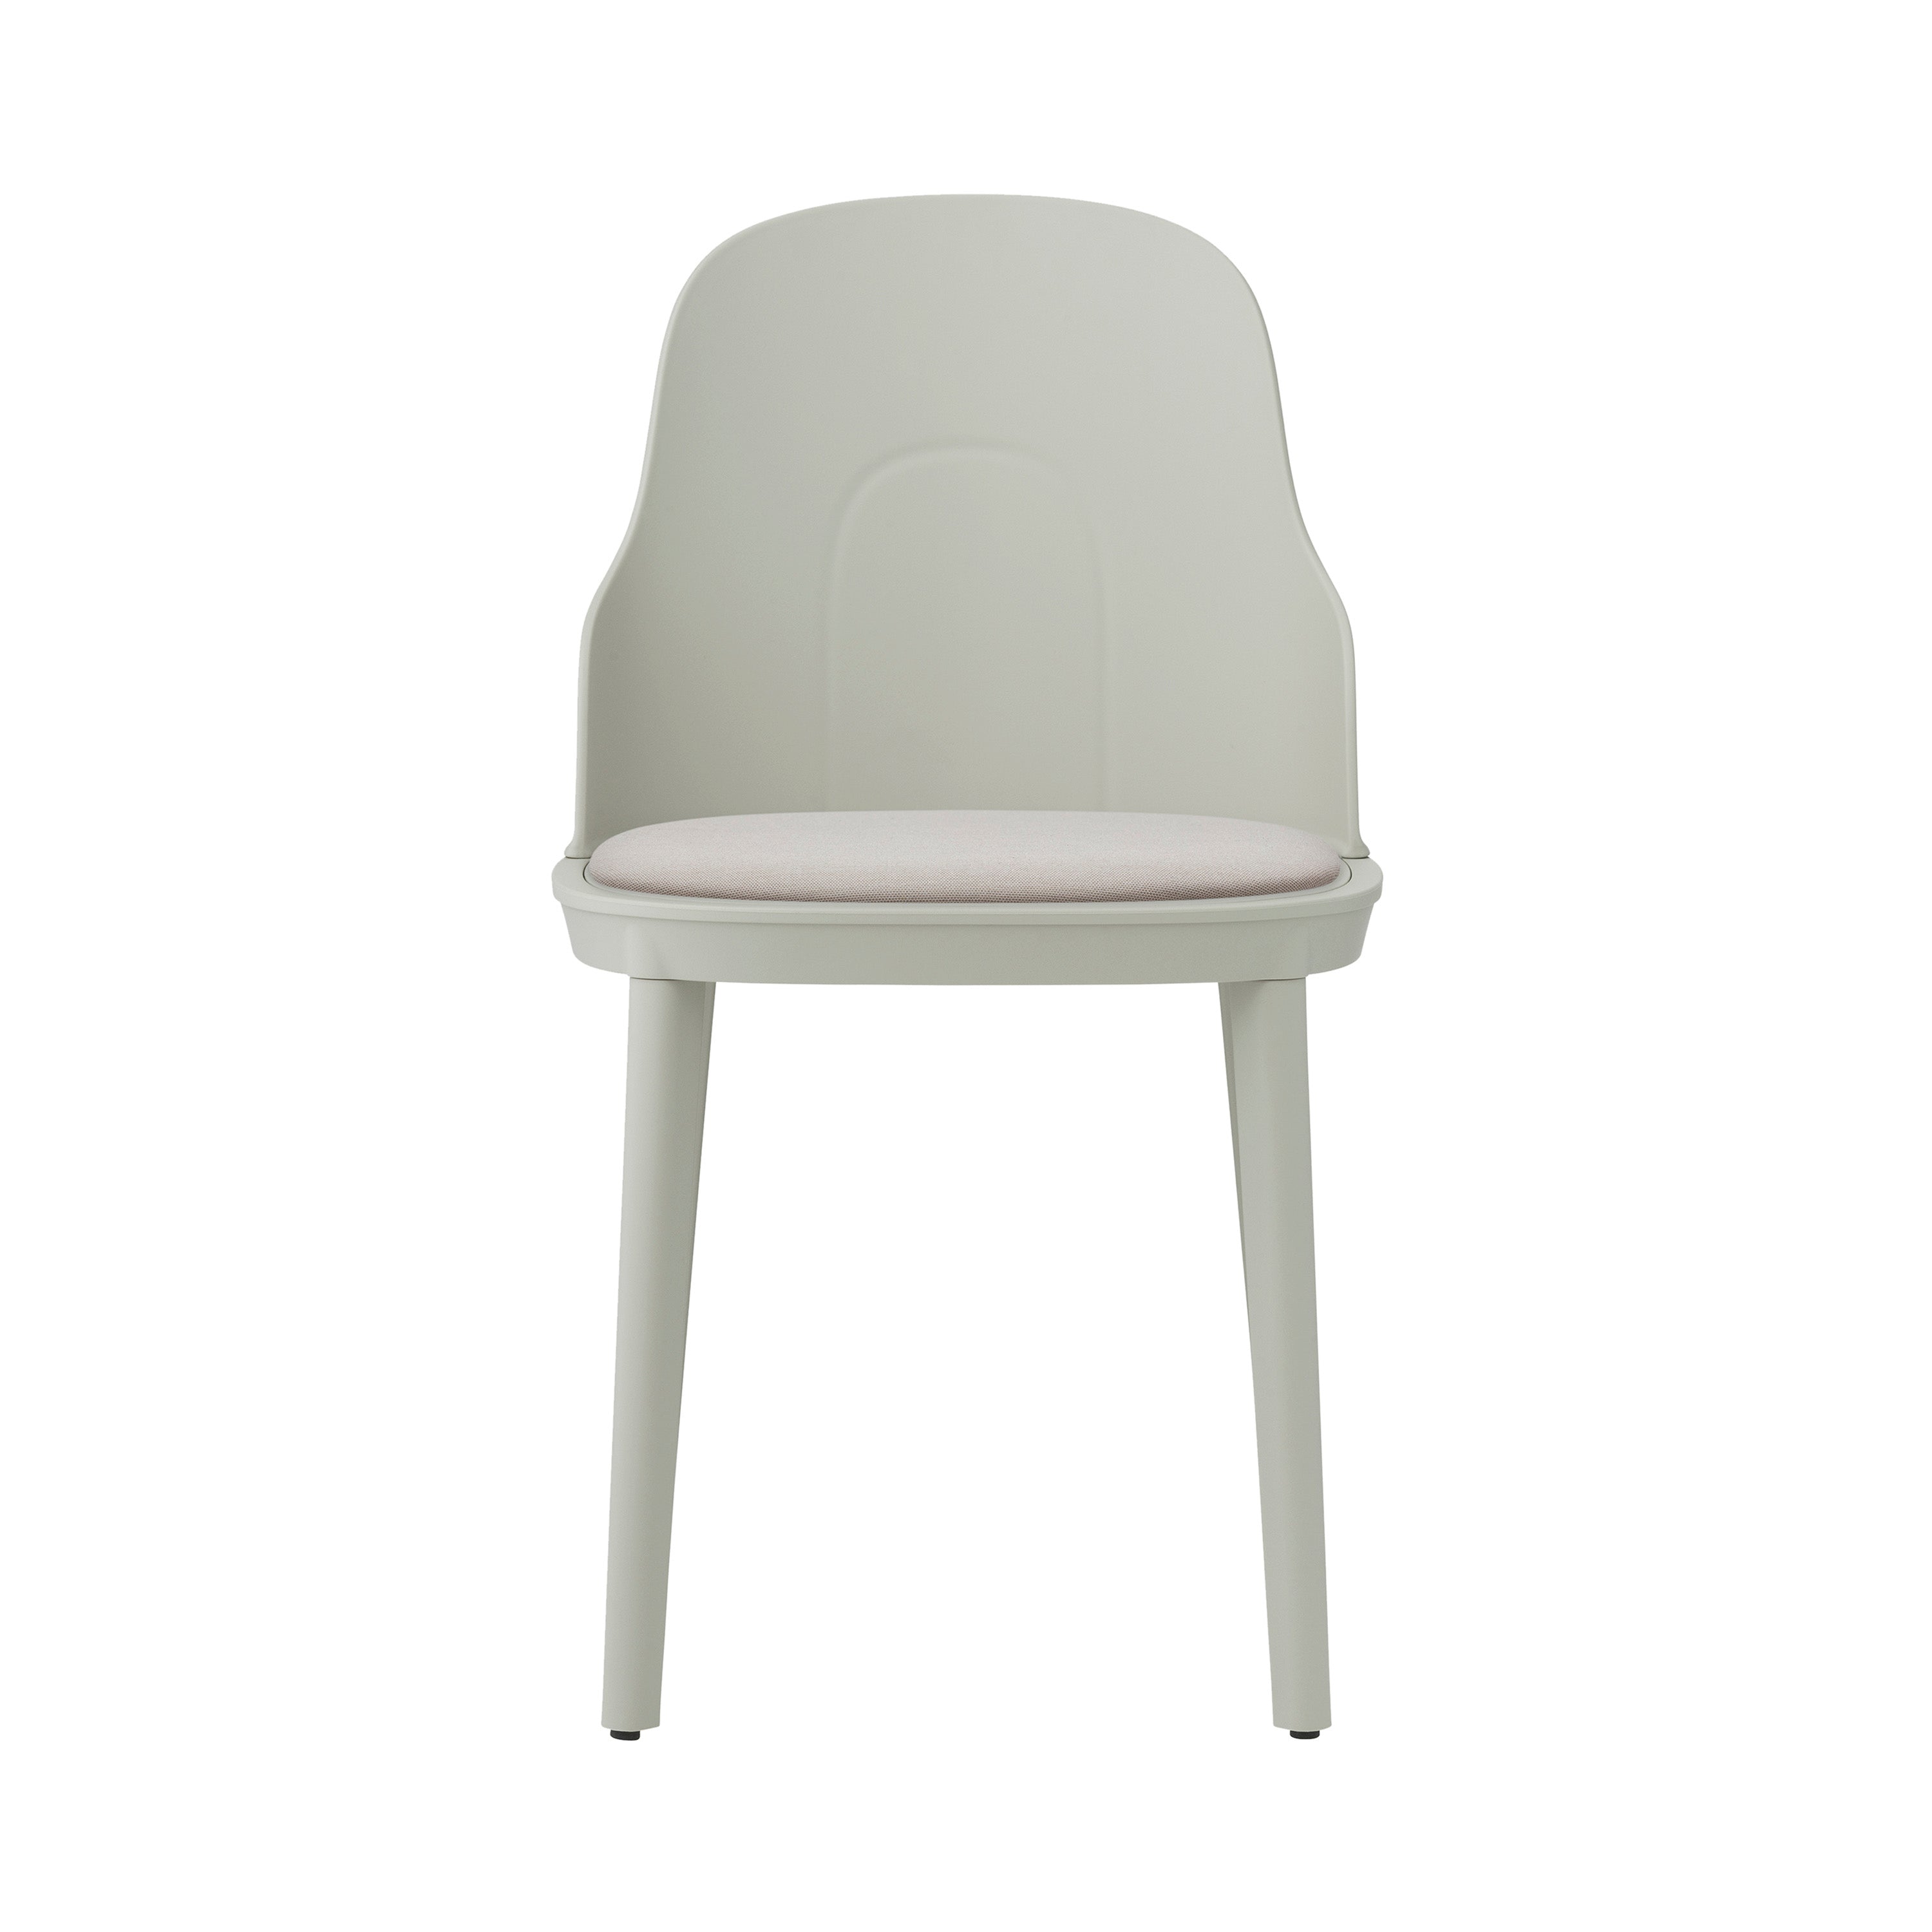 Allez Chair: Upholstered + Warm Grey + Polypropylene